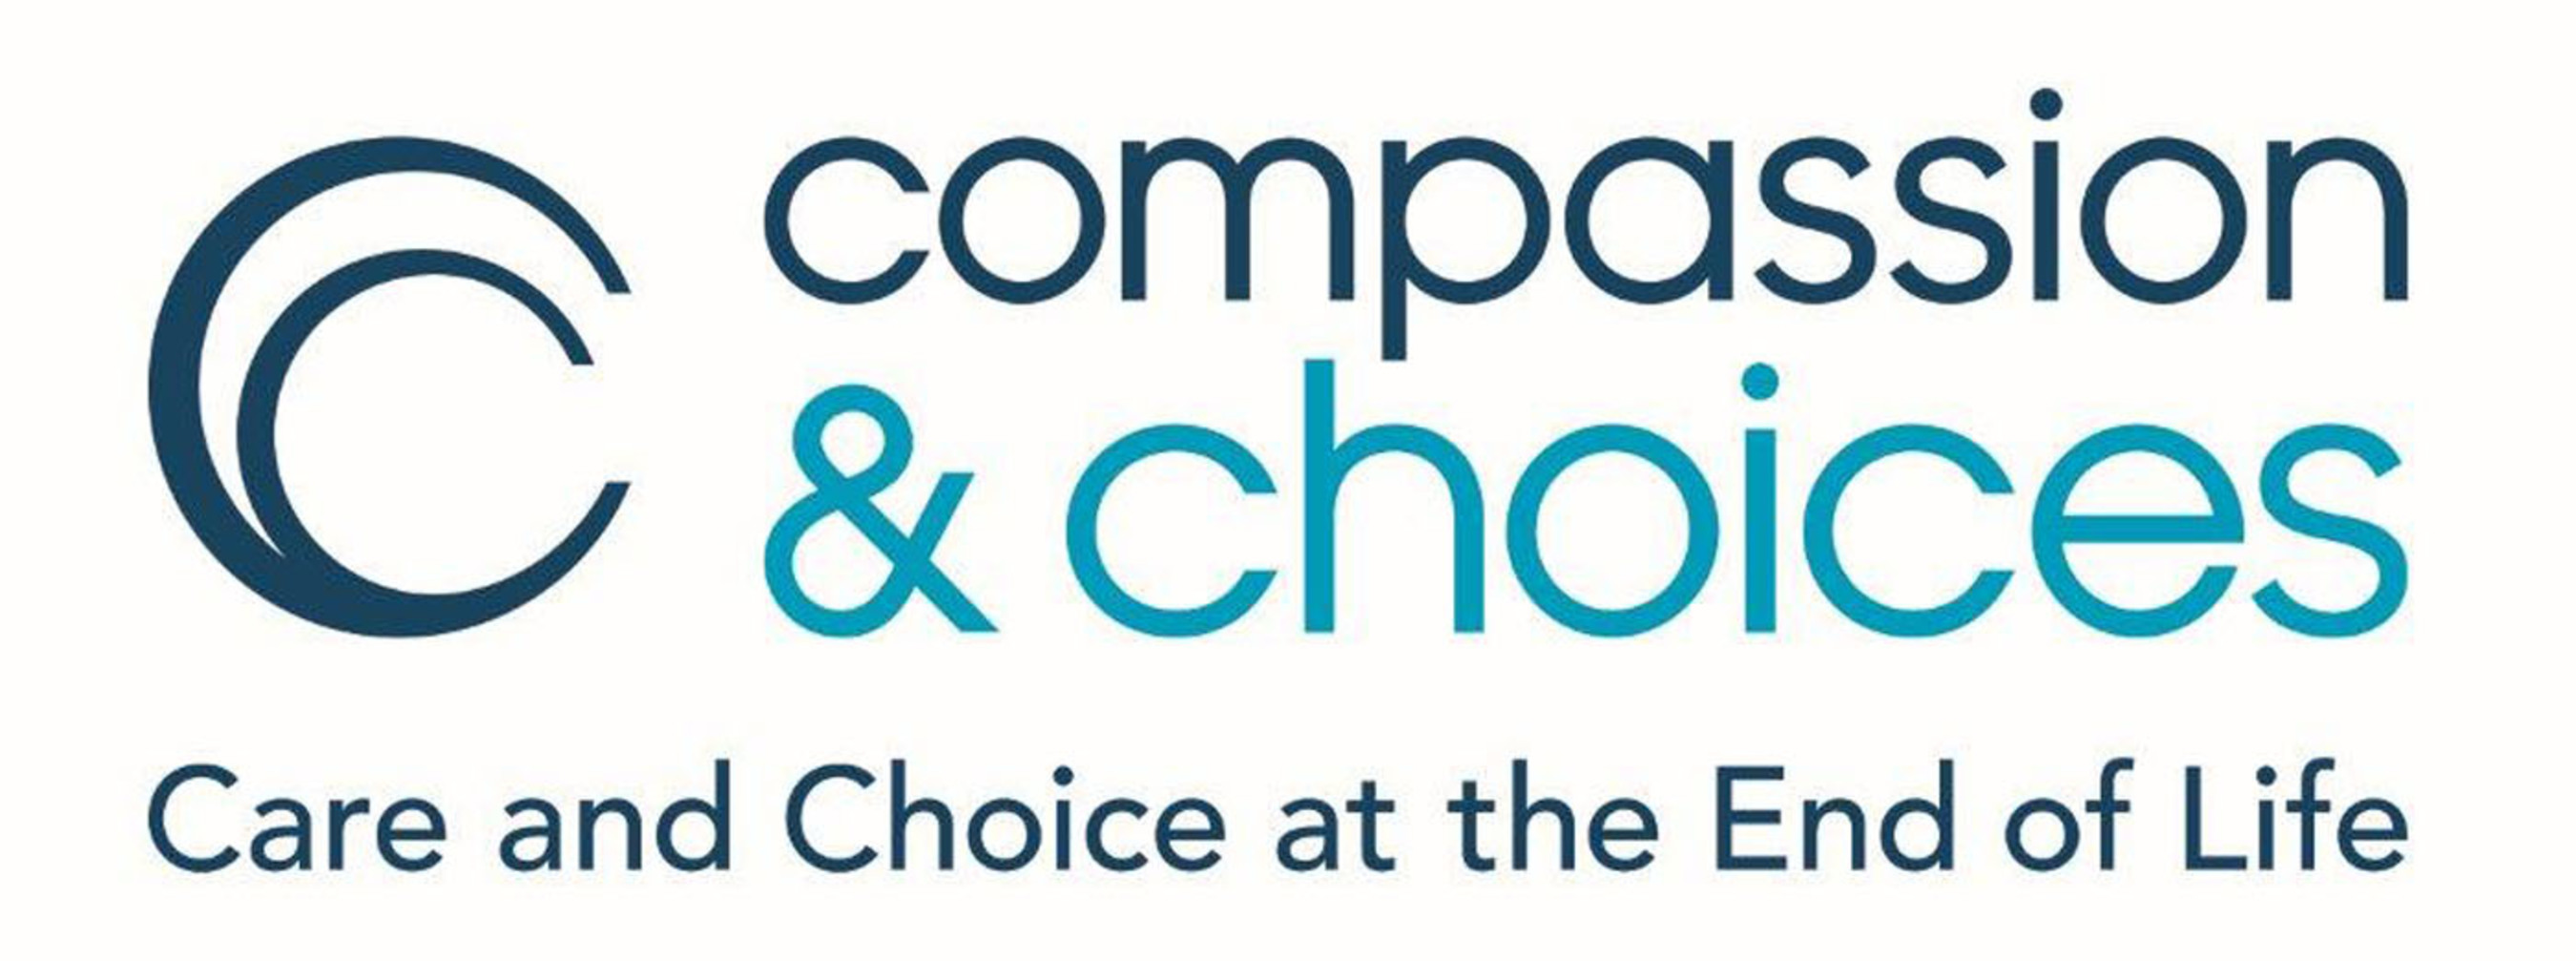 Compassion & Choices logo. (PRNewsFoto/Compassion & Choices) (PRNewsFoto/COMPASSION & CHOICES)